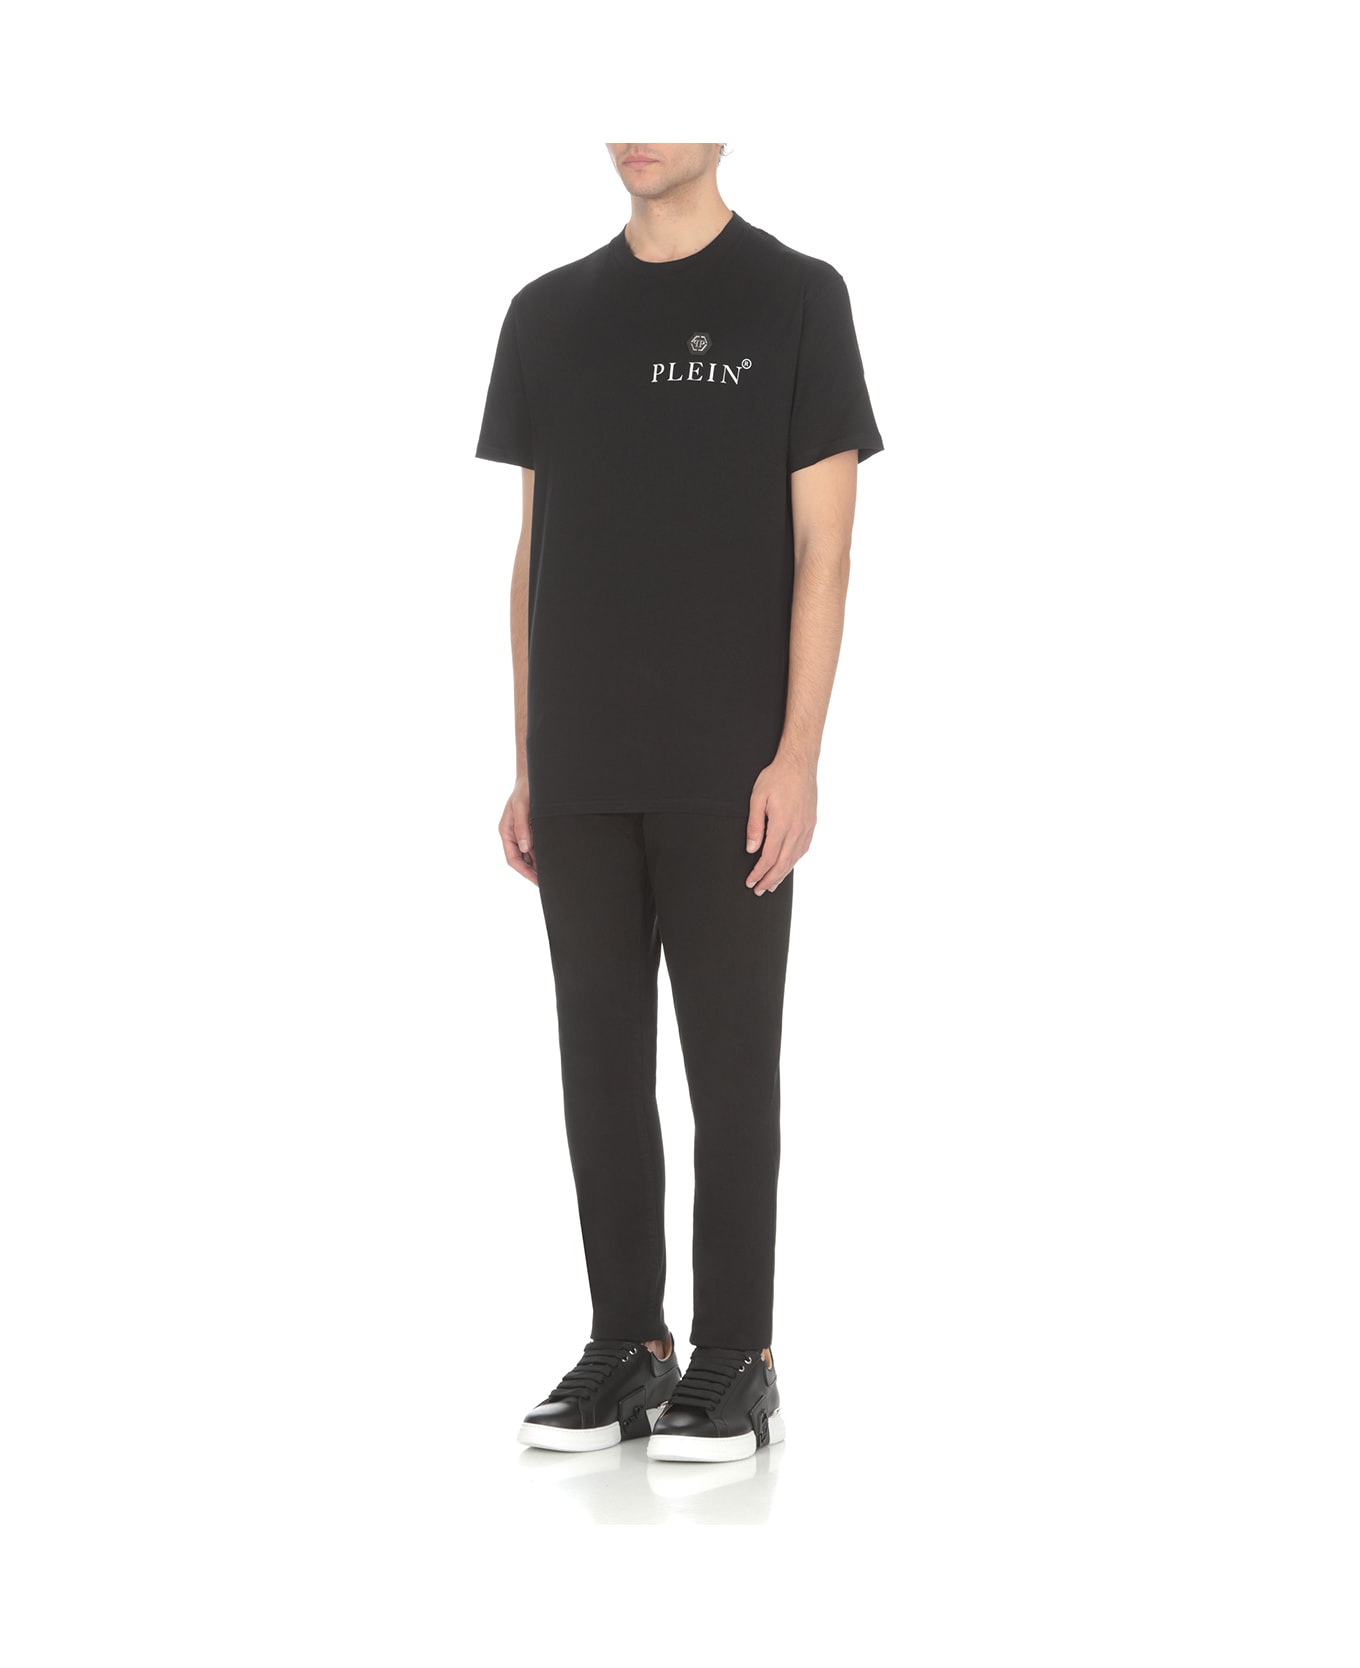 Philipp Plein Ss Hexagon T-shirt - Black